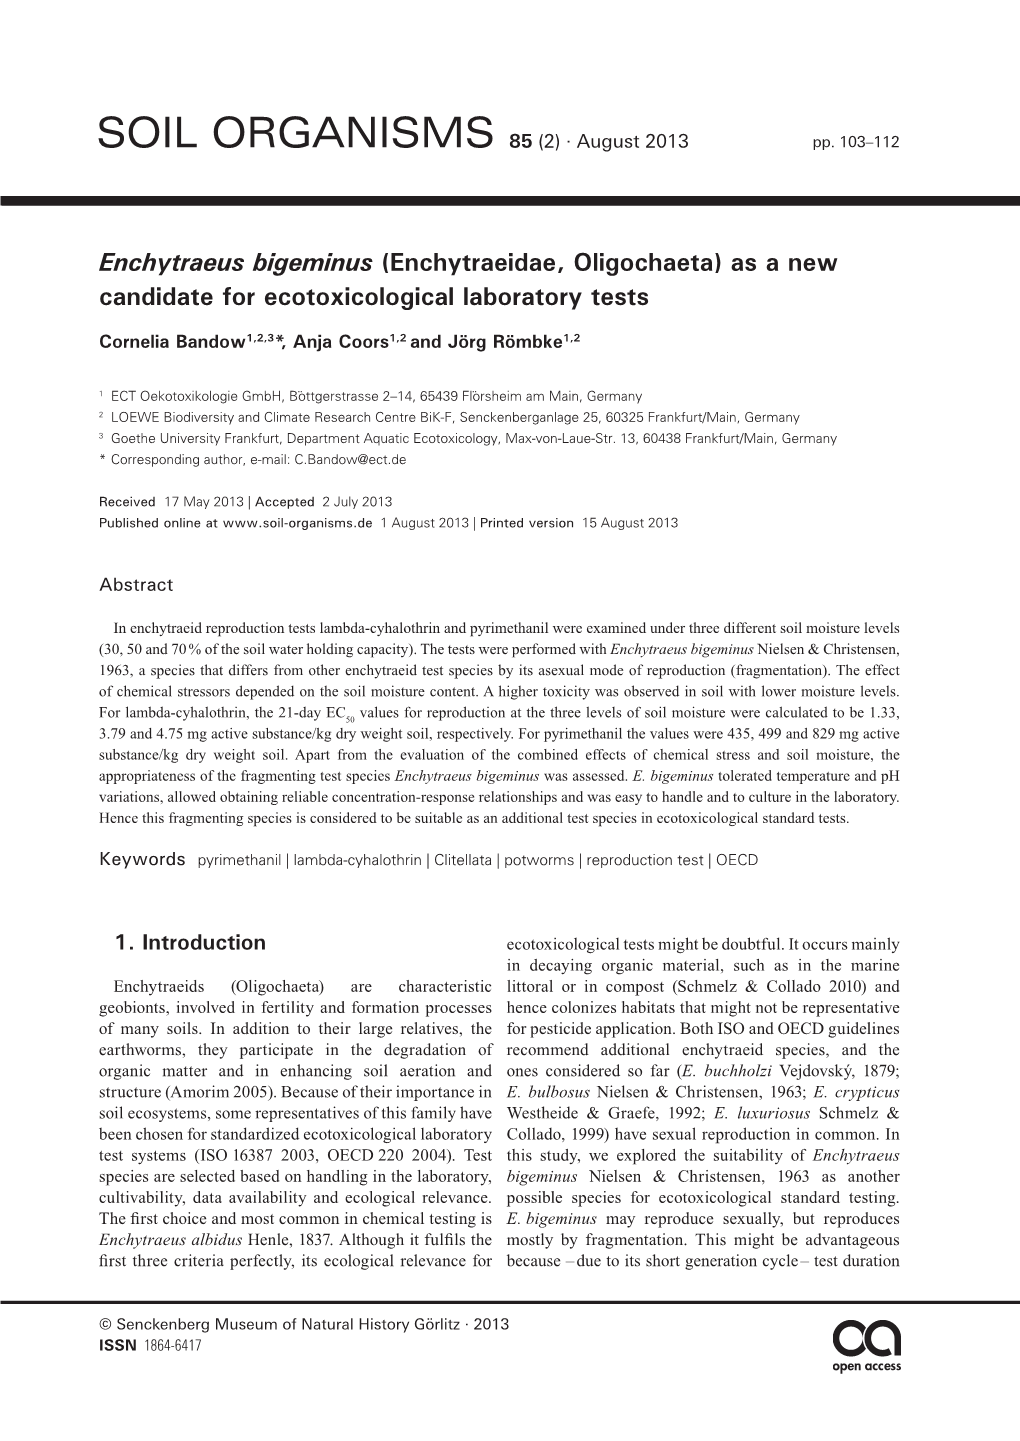 Enchytraeus Bigeminus (Enchytraeidae, Oligochaeta) As a New Candidate for Ecotoxicological Laboratory Tests